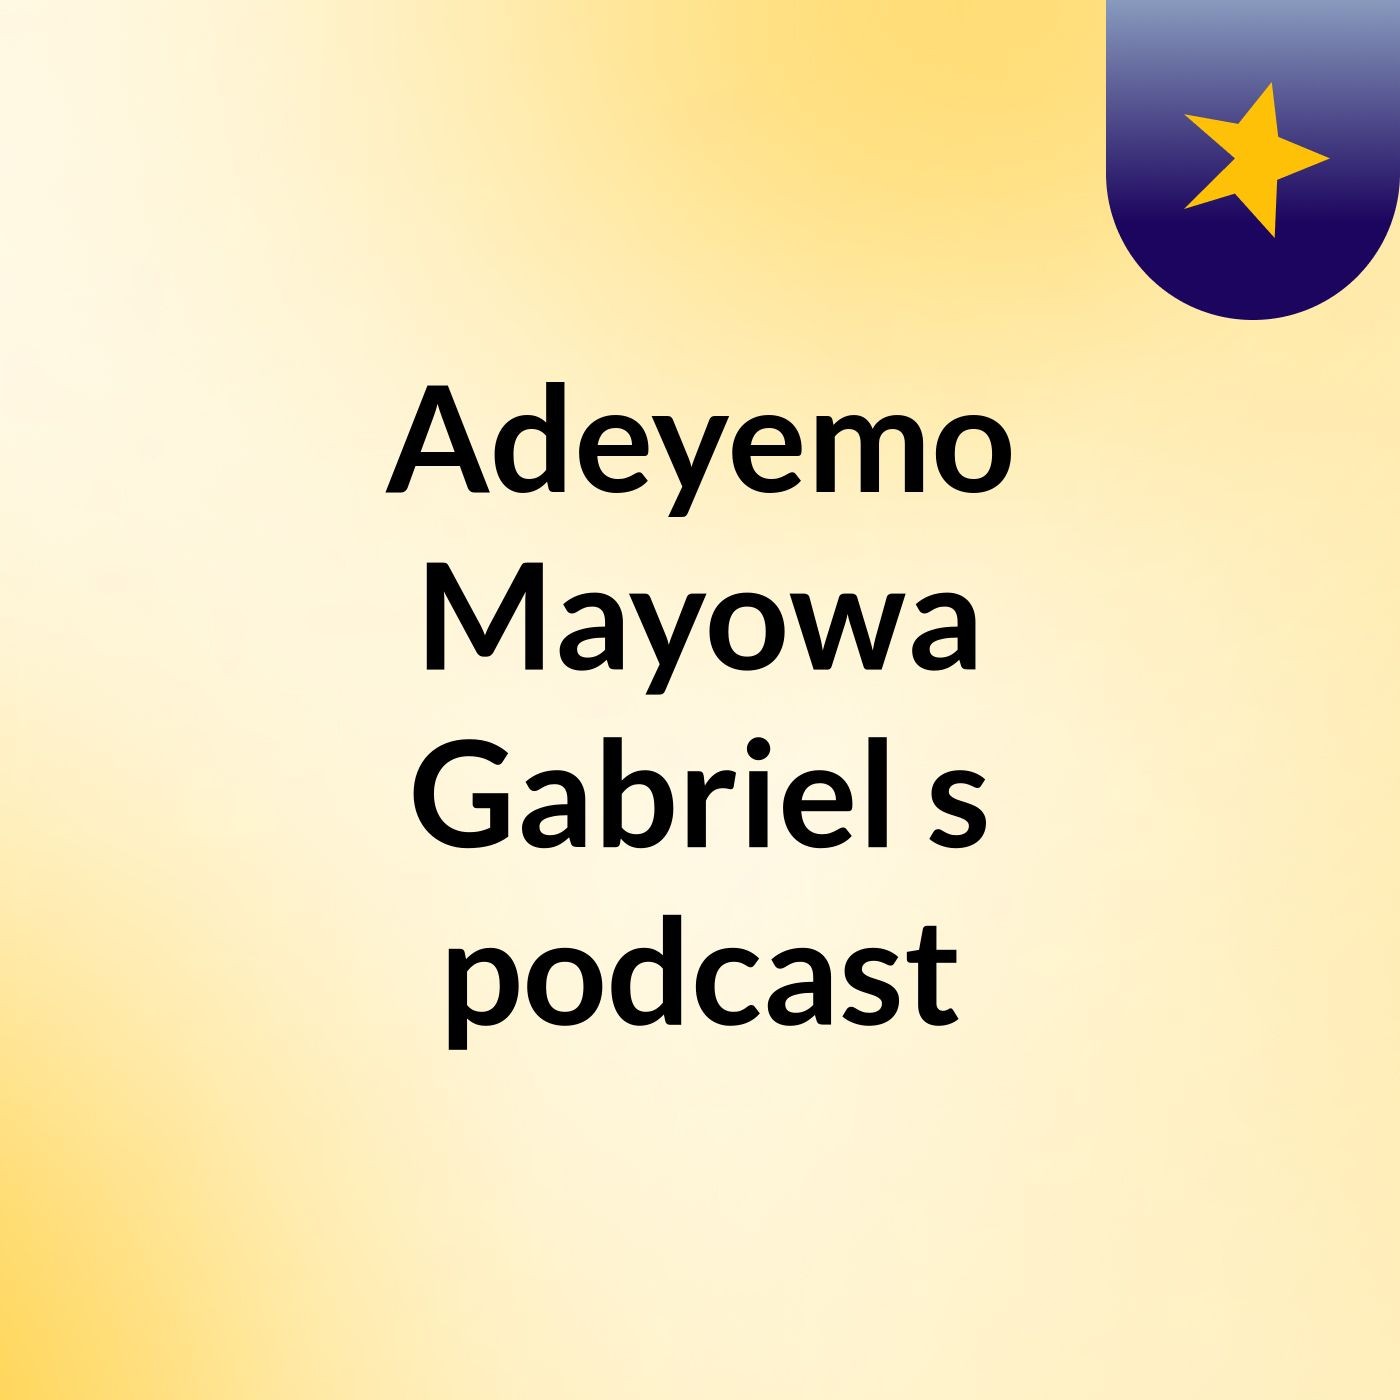 Episode 33 - Adeyemo Mayowa Gabriel's podcast